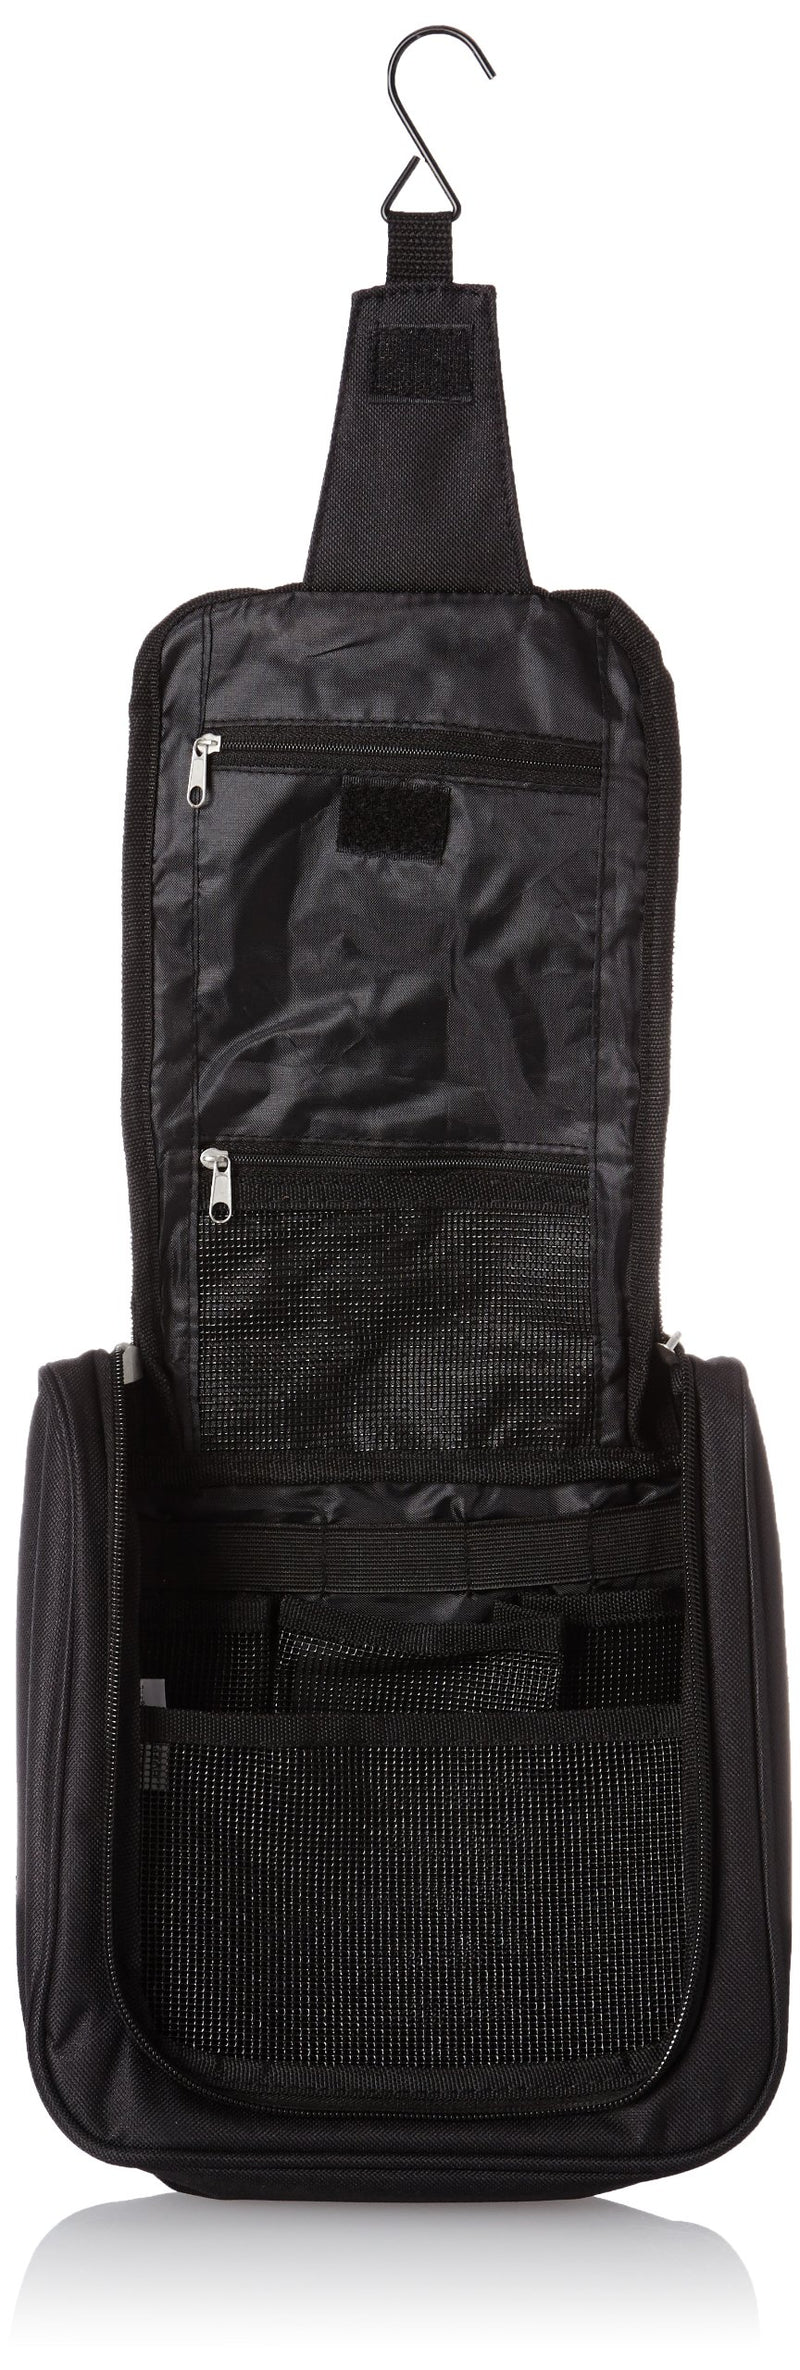 [Australia] - Everest Toiletry Bag, Black, One Size 